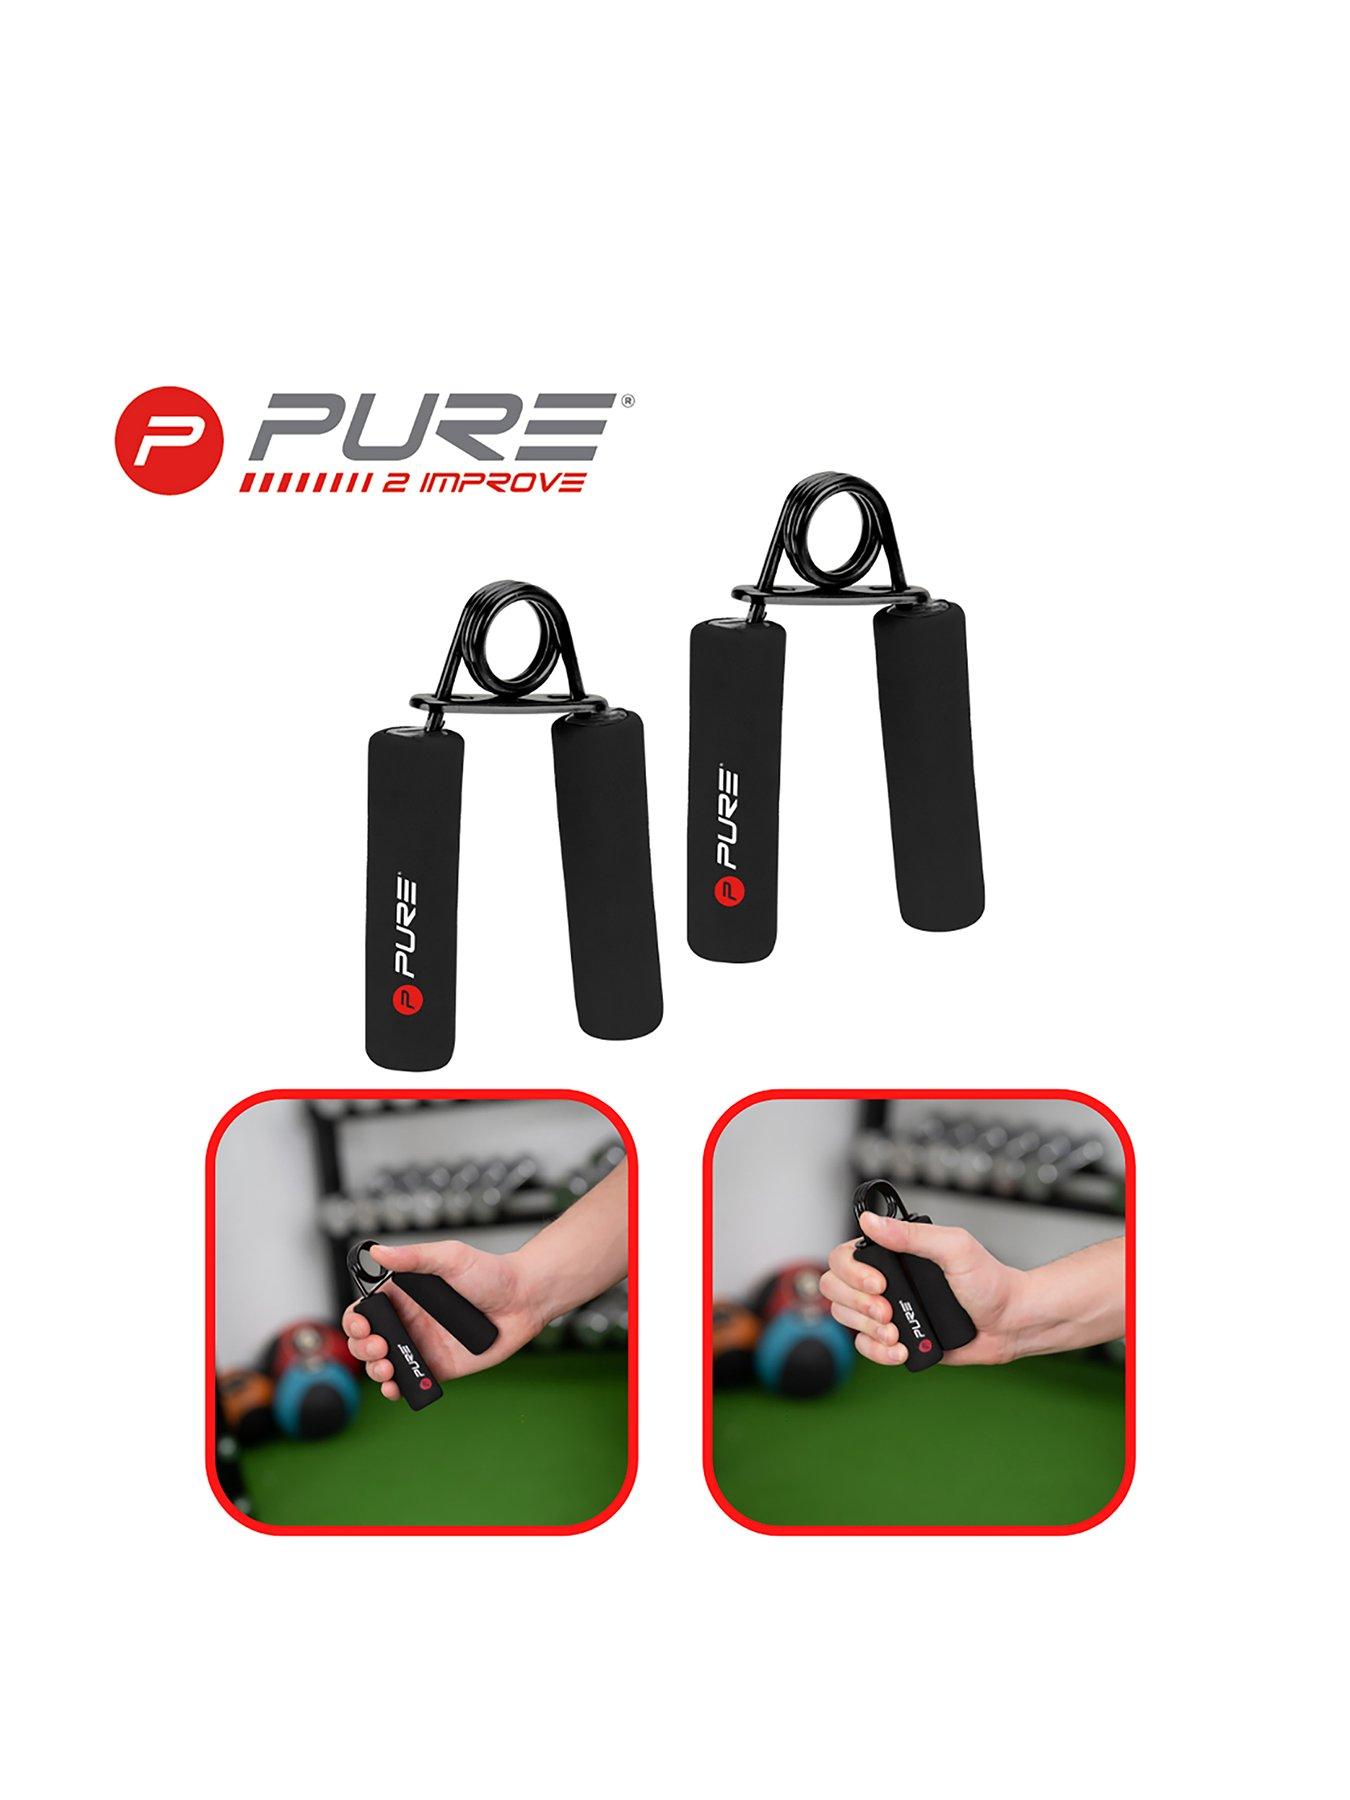 Pure2improve, Sporting goods, Sport